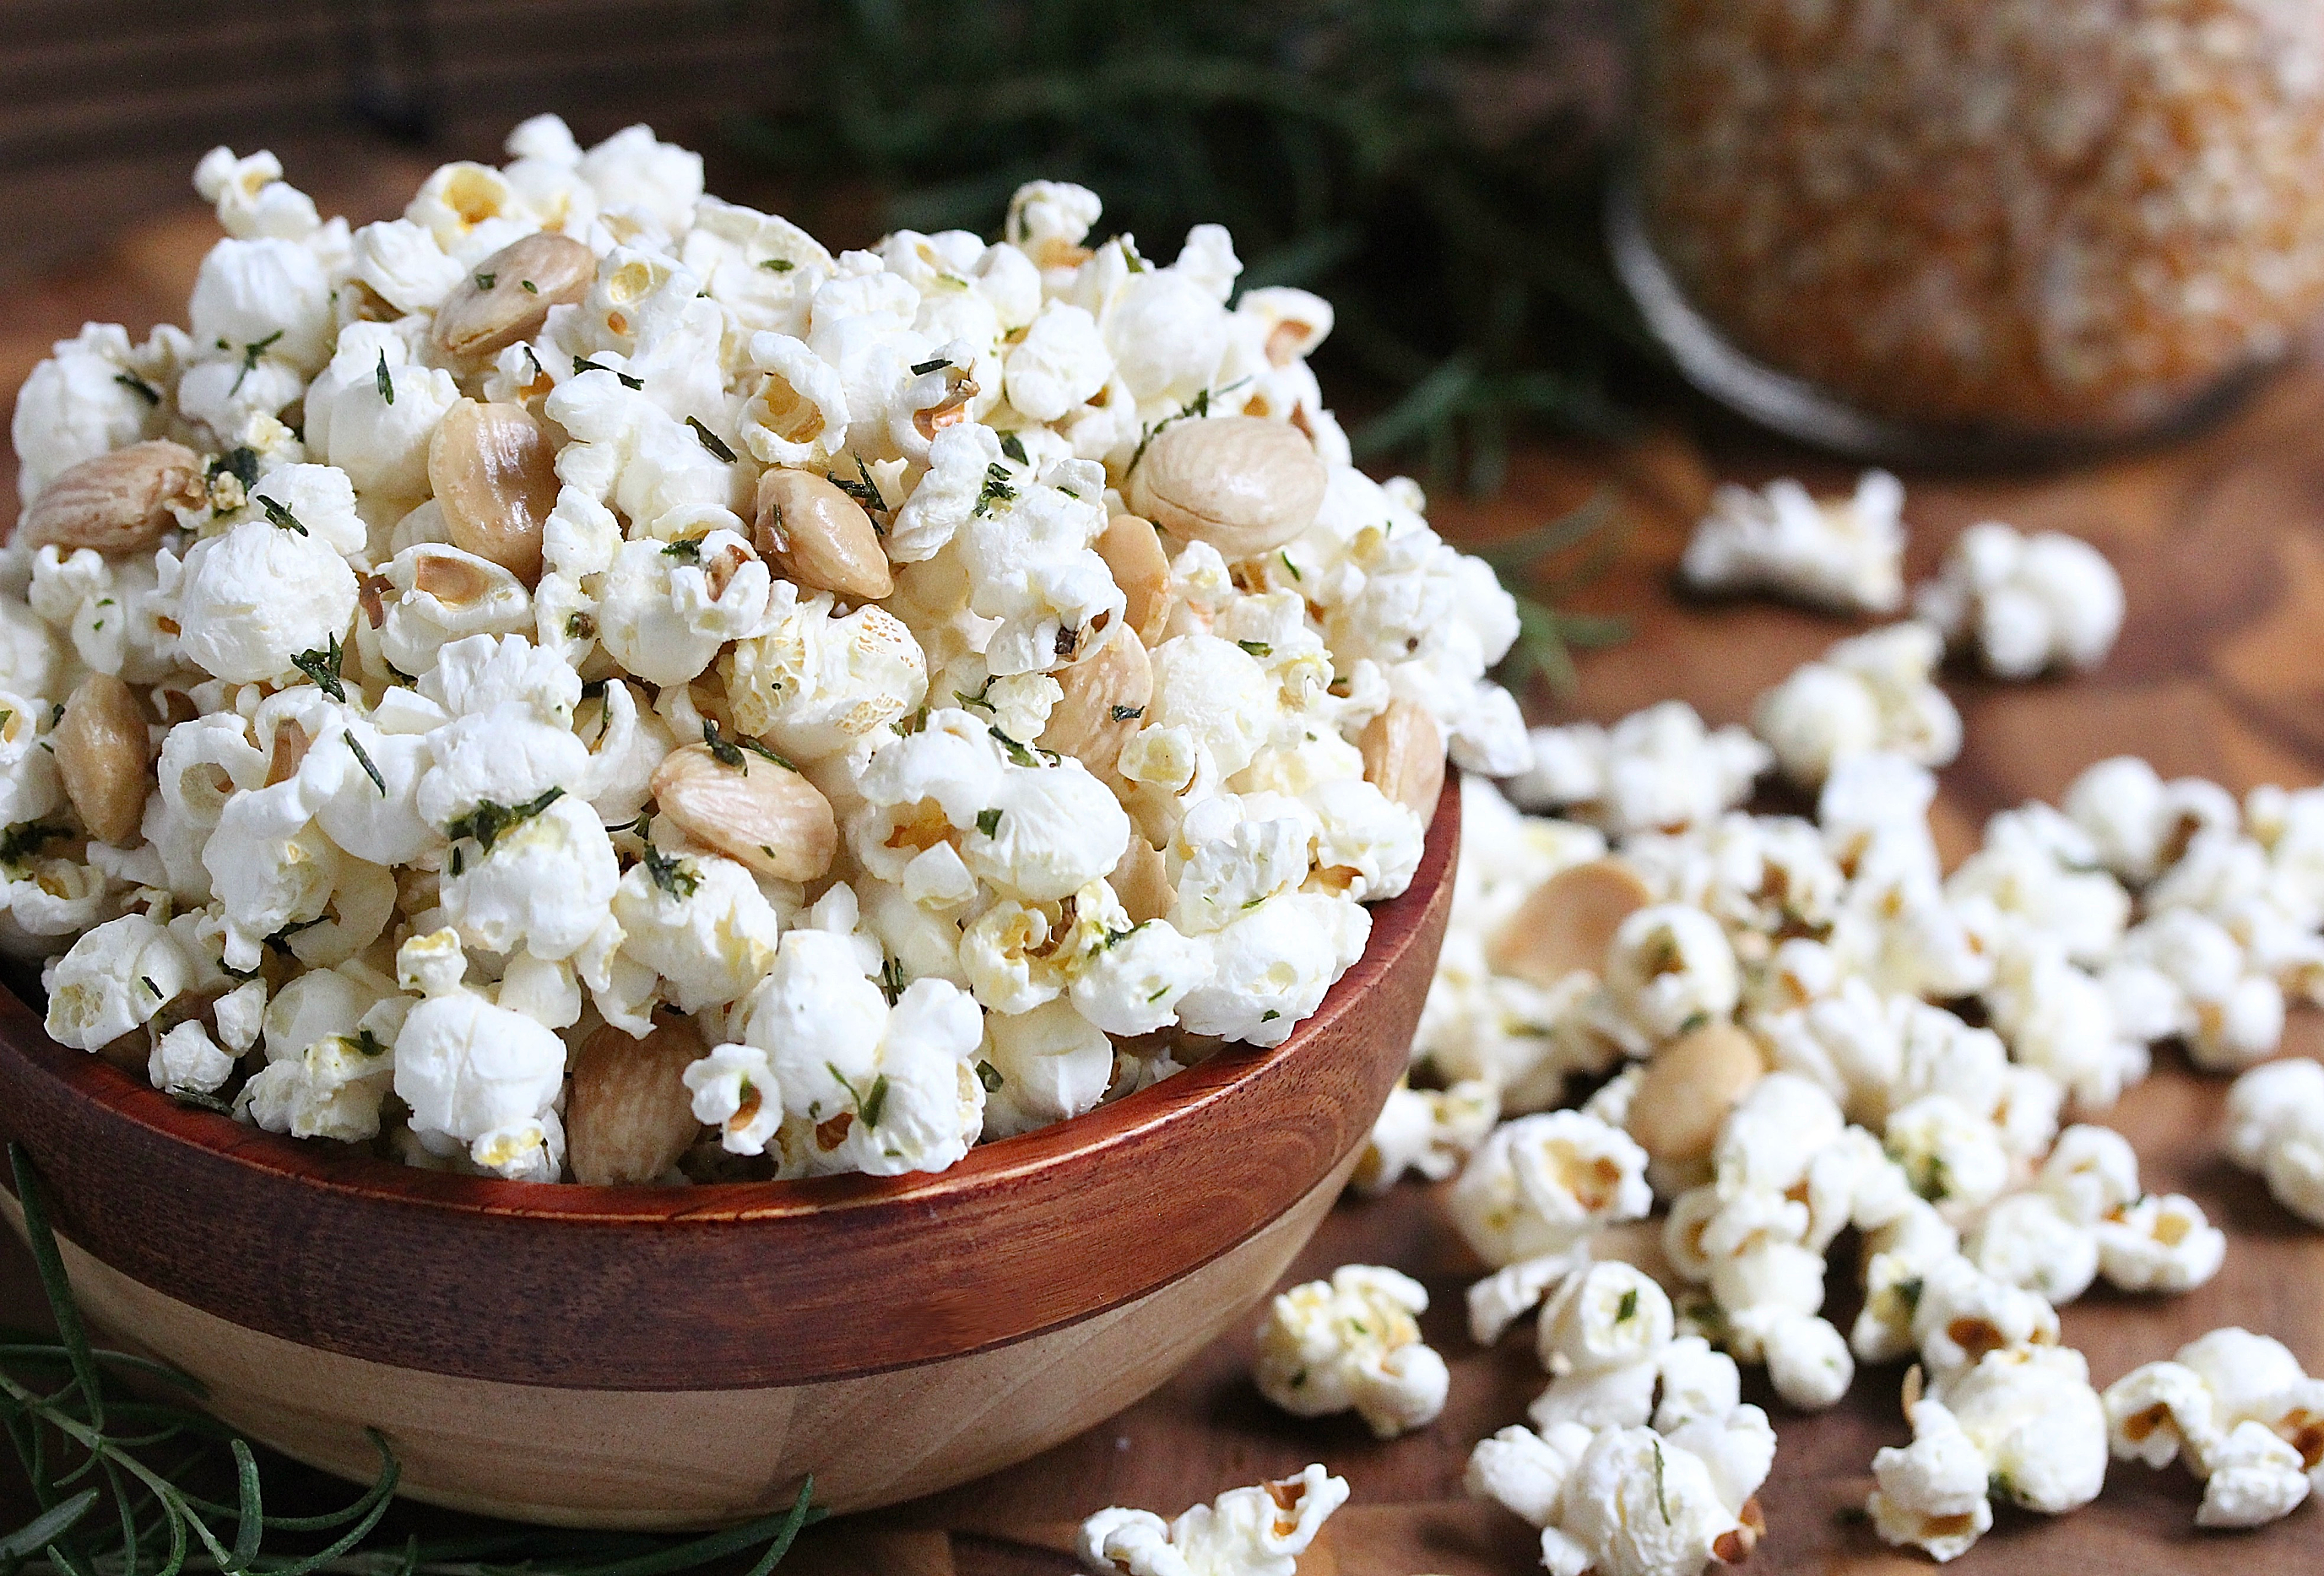 Rosemary Garlic with Marcona Almond Popcorn